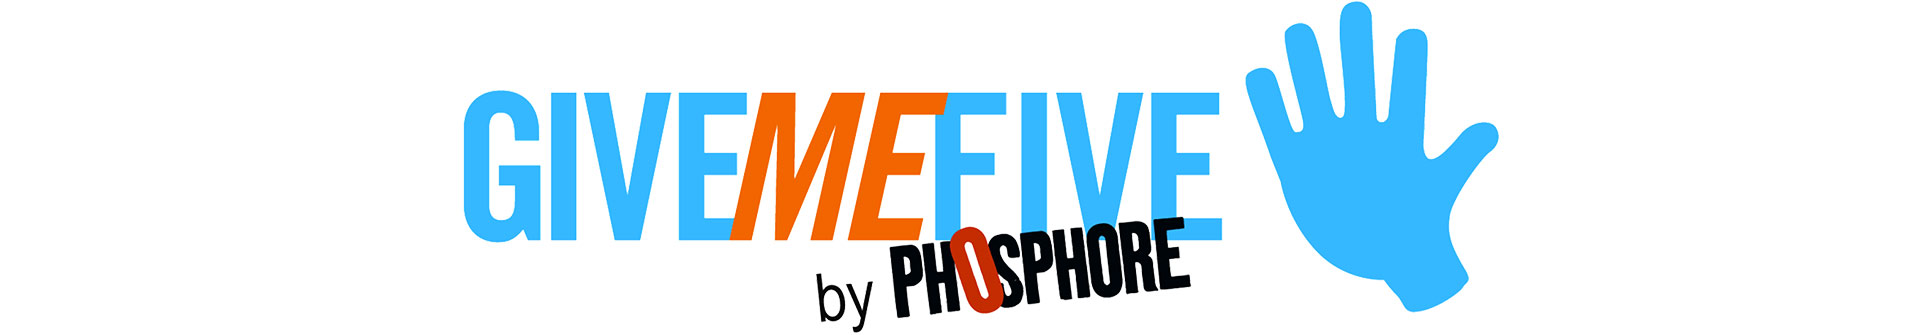 logo Give me five